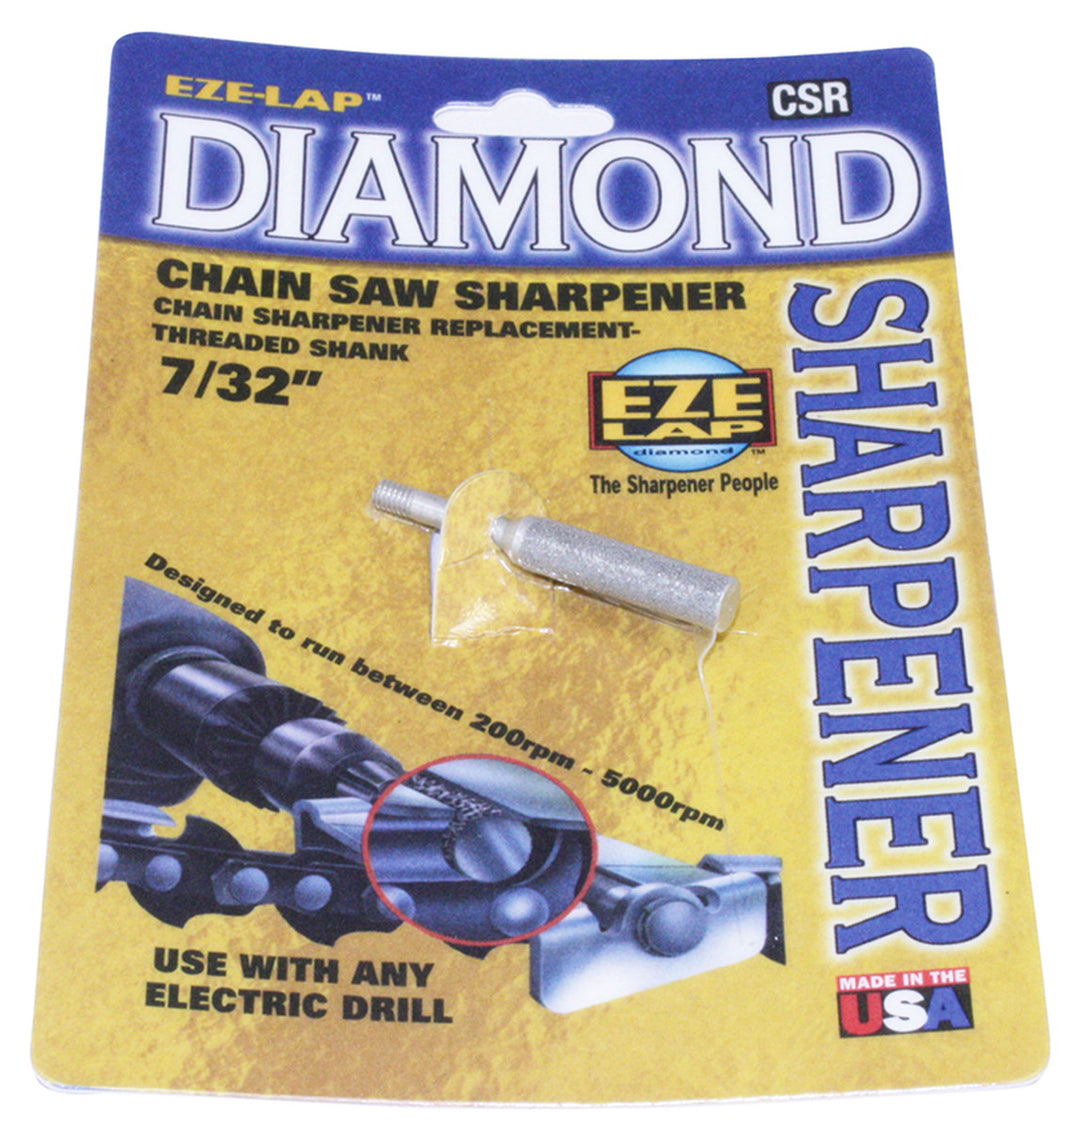 Eze-Lap Diamond Chainsaw Chain Sharpener 7/32" Treaded